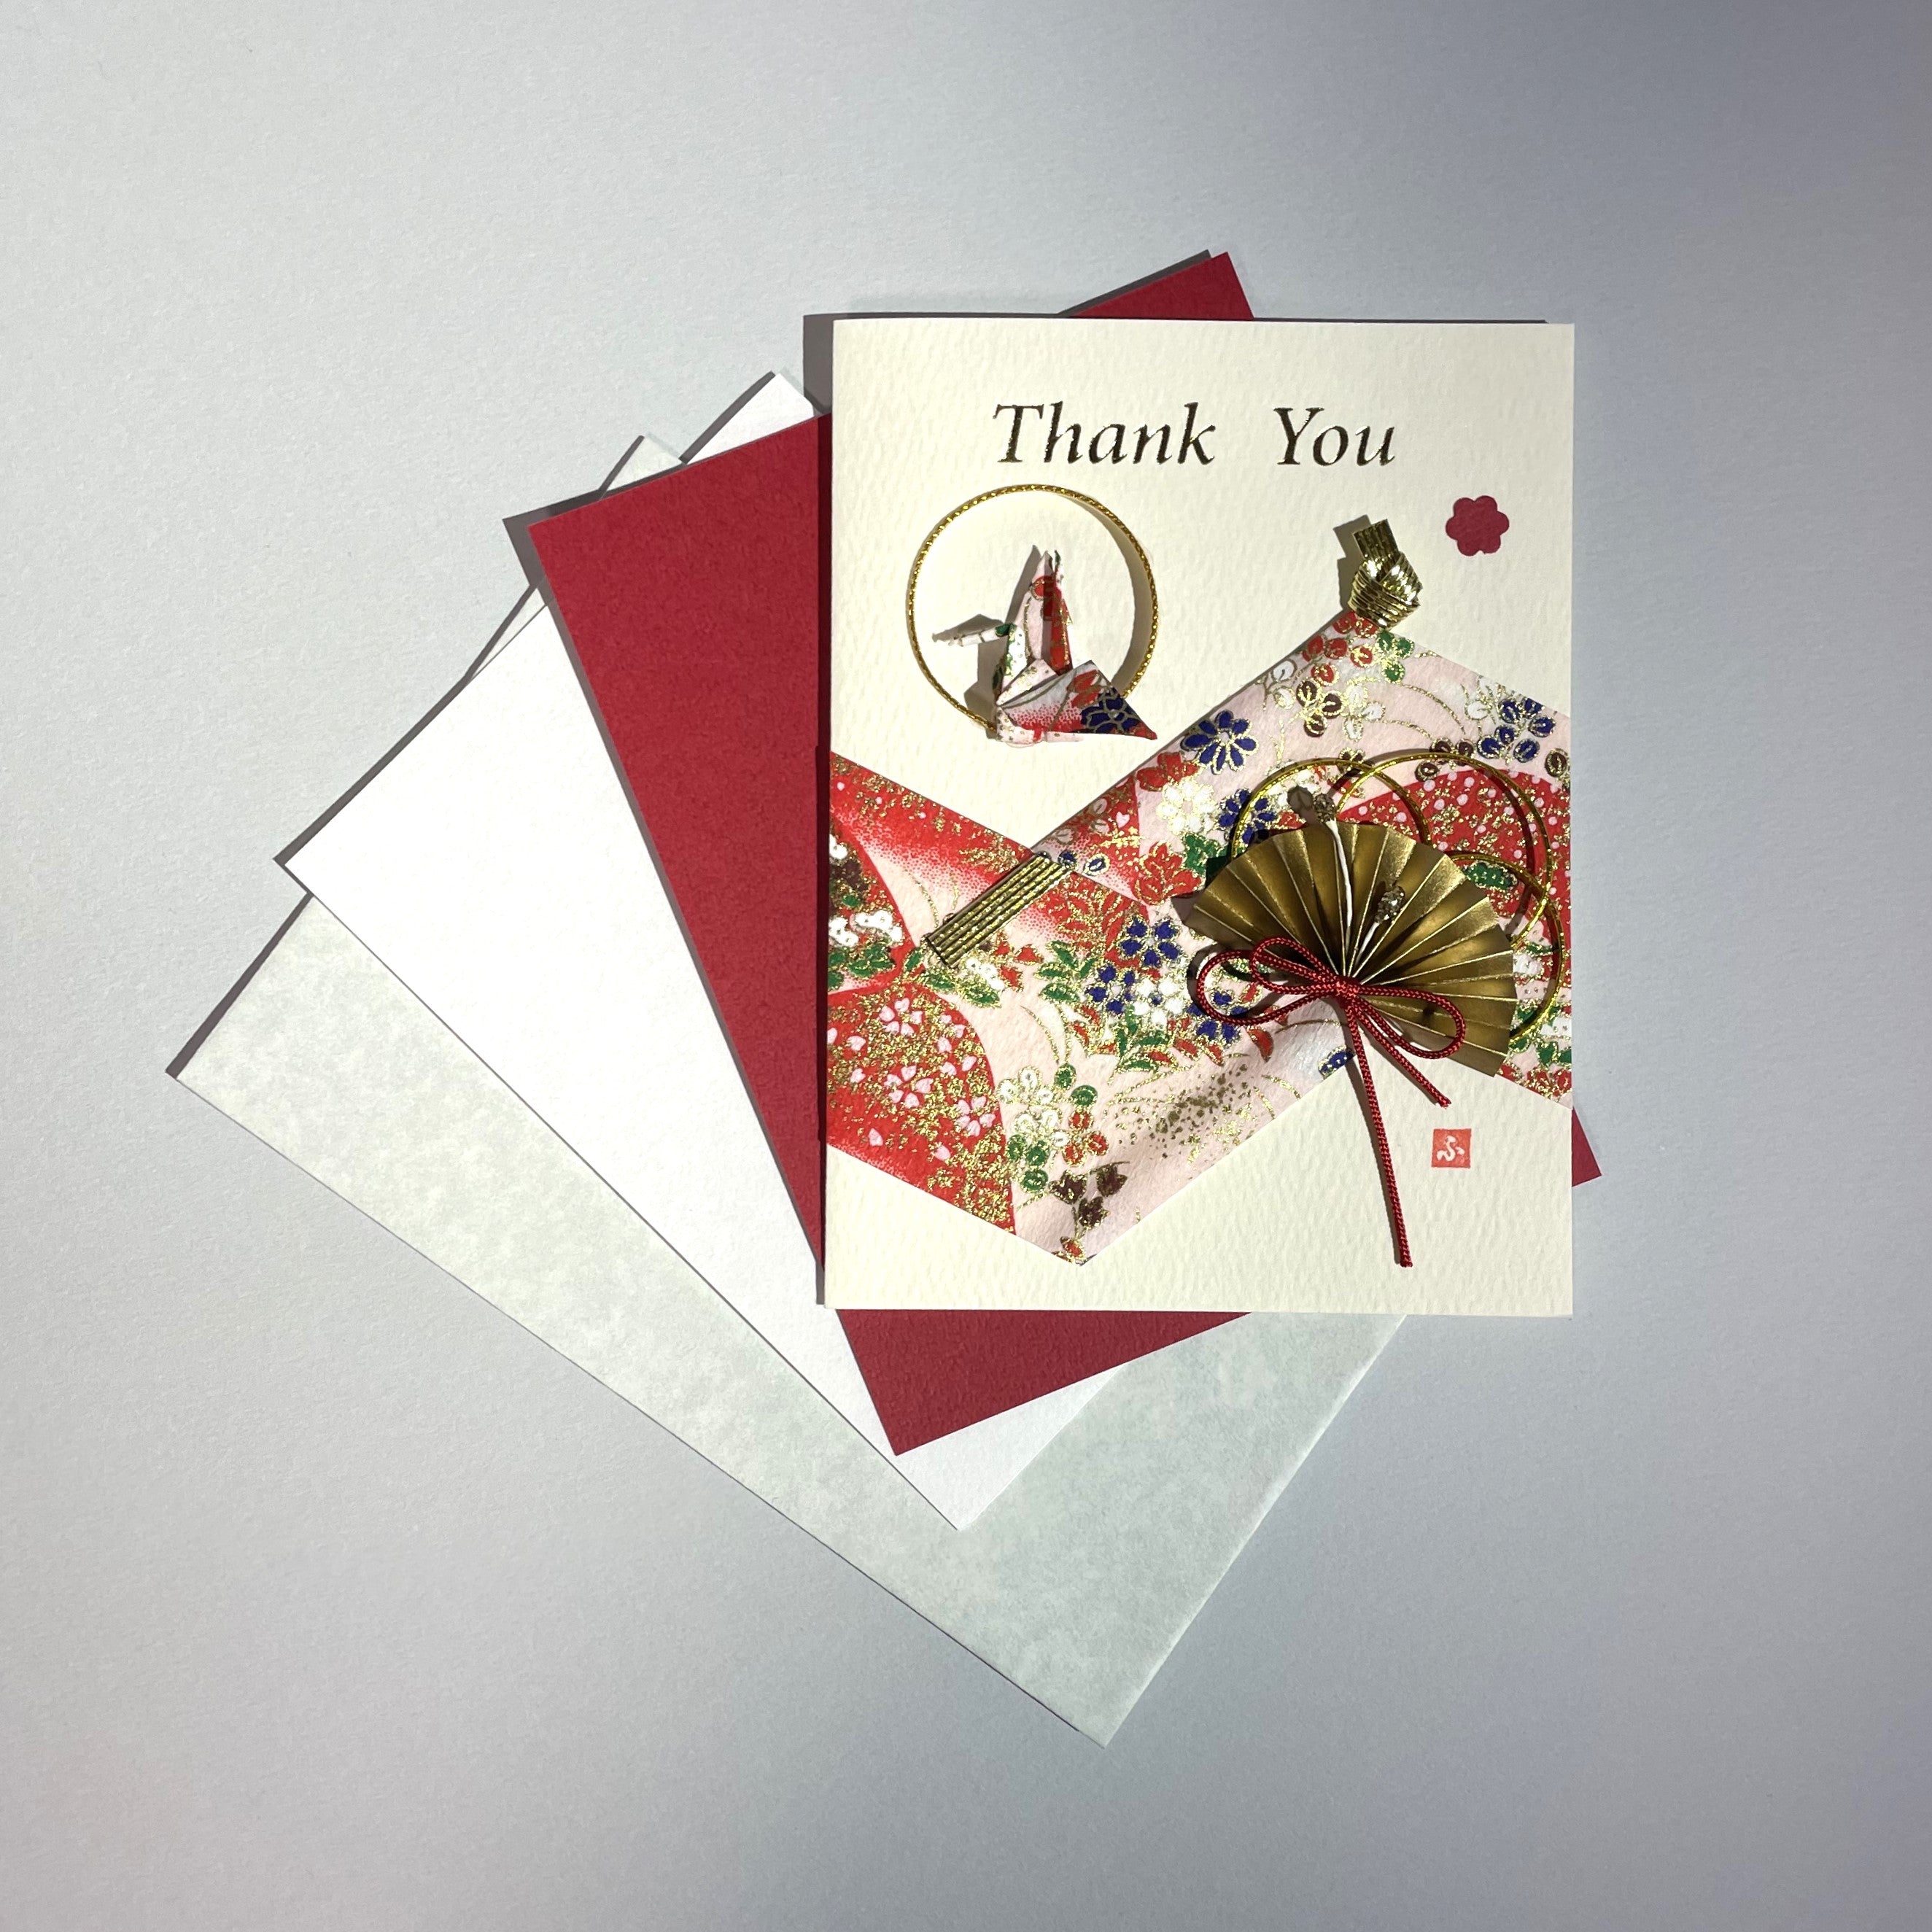 Handmade Greeting Card "Red Crane (Thank You)"